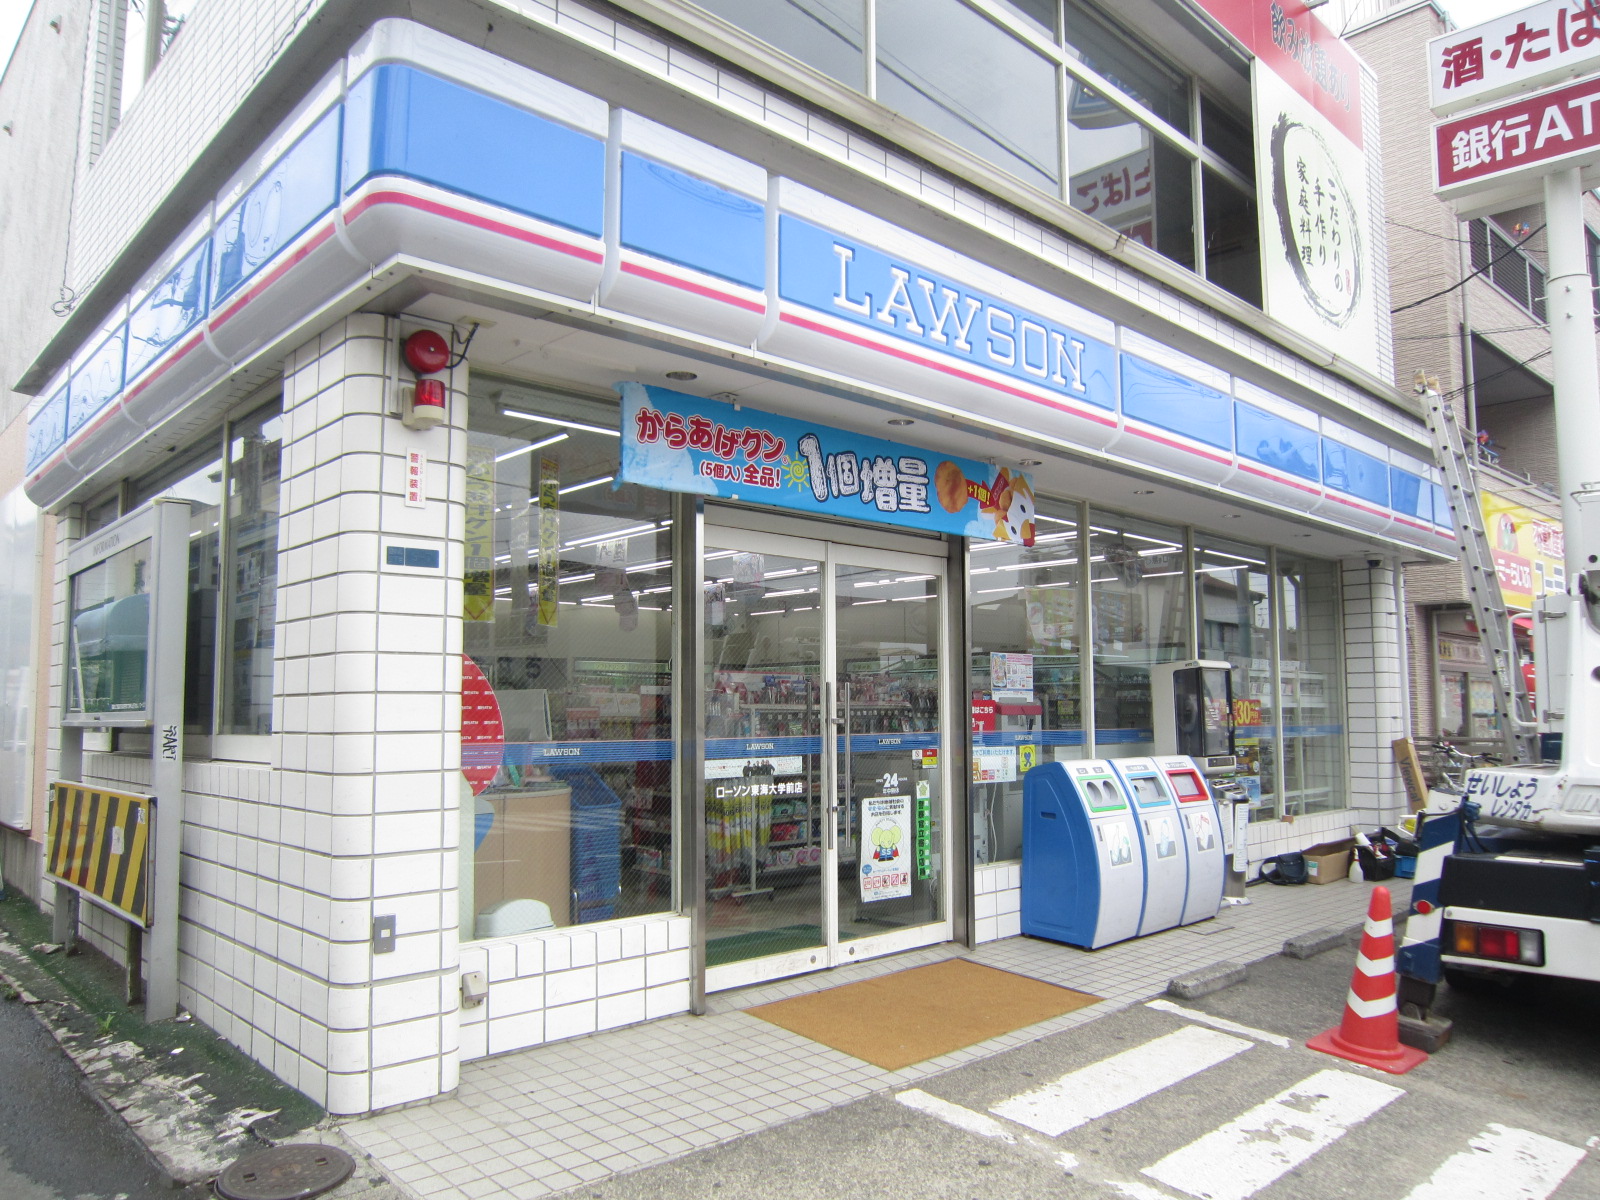 Convenience store. 290m until Lawson Tokai University before the store (convenience store)